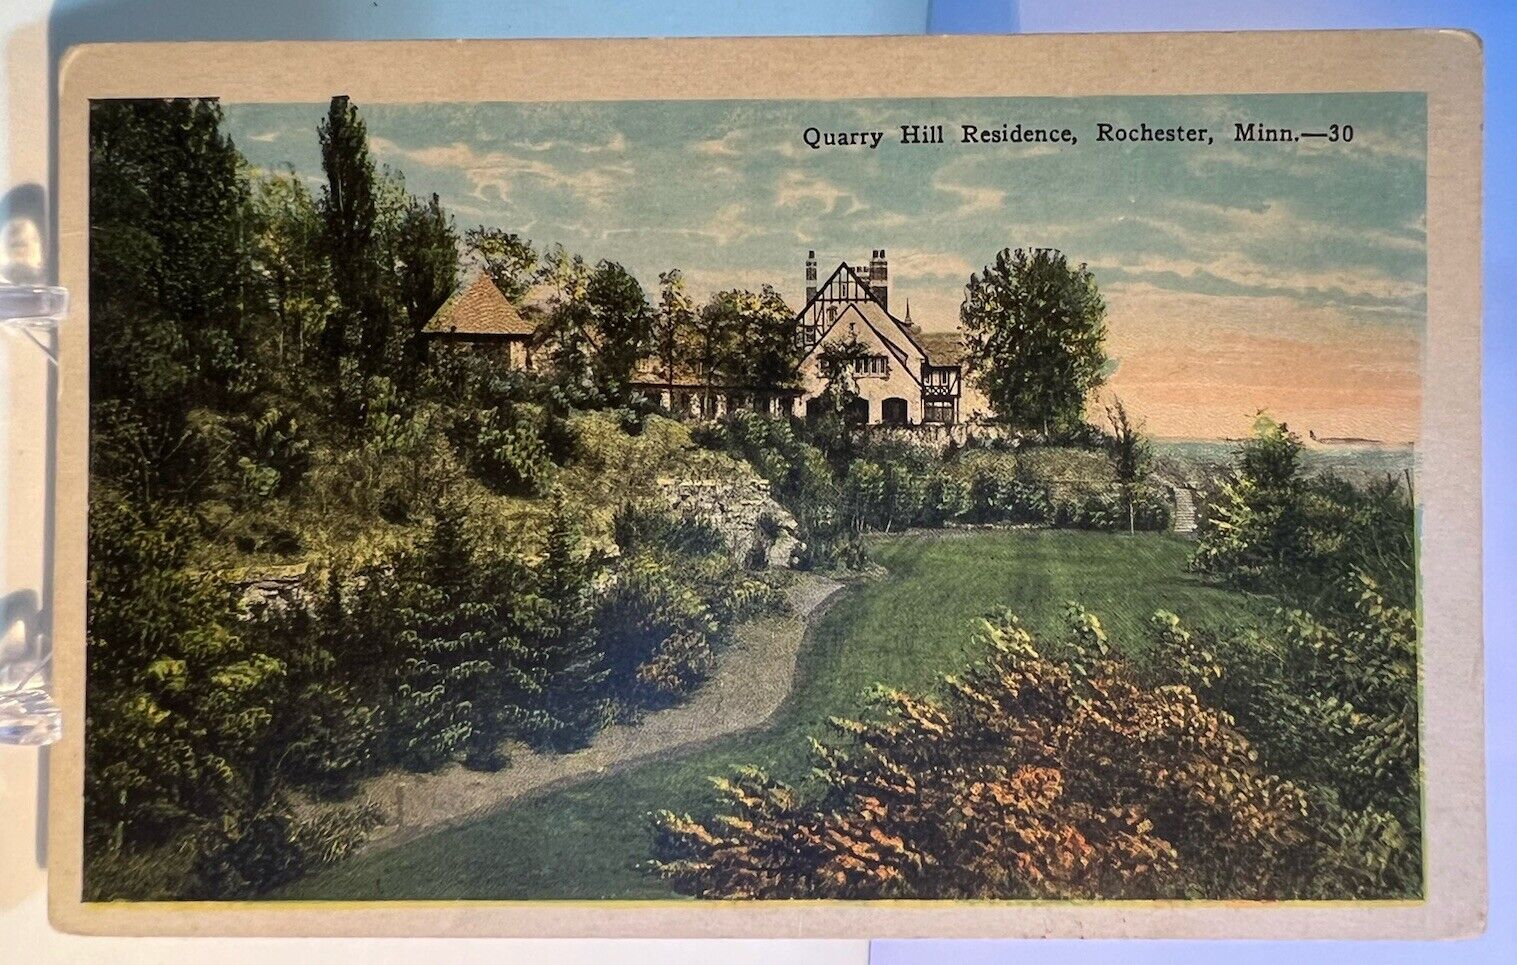 Rochester, Minnesota - Quarry Hill Residence - Vintage Postcard - Rare View